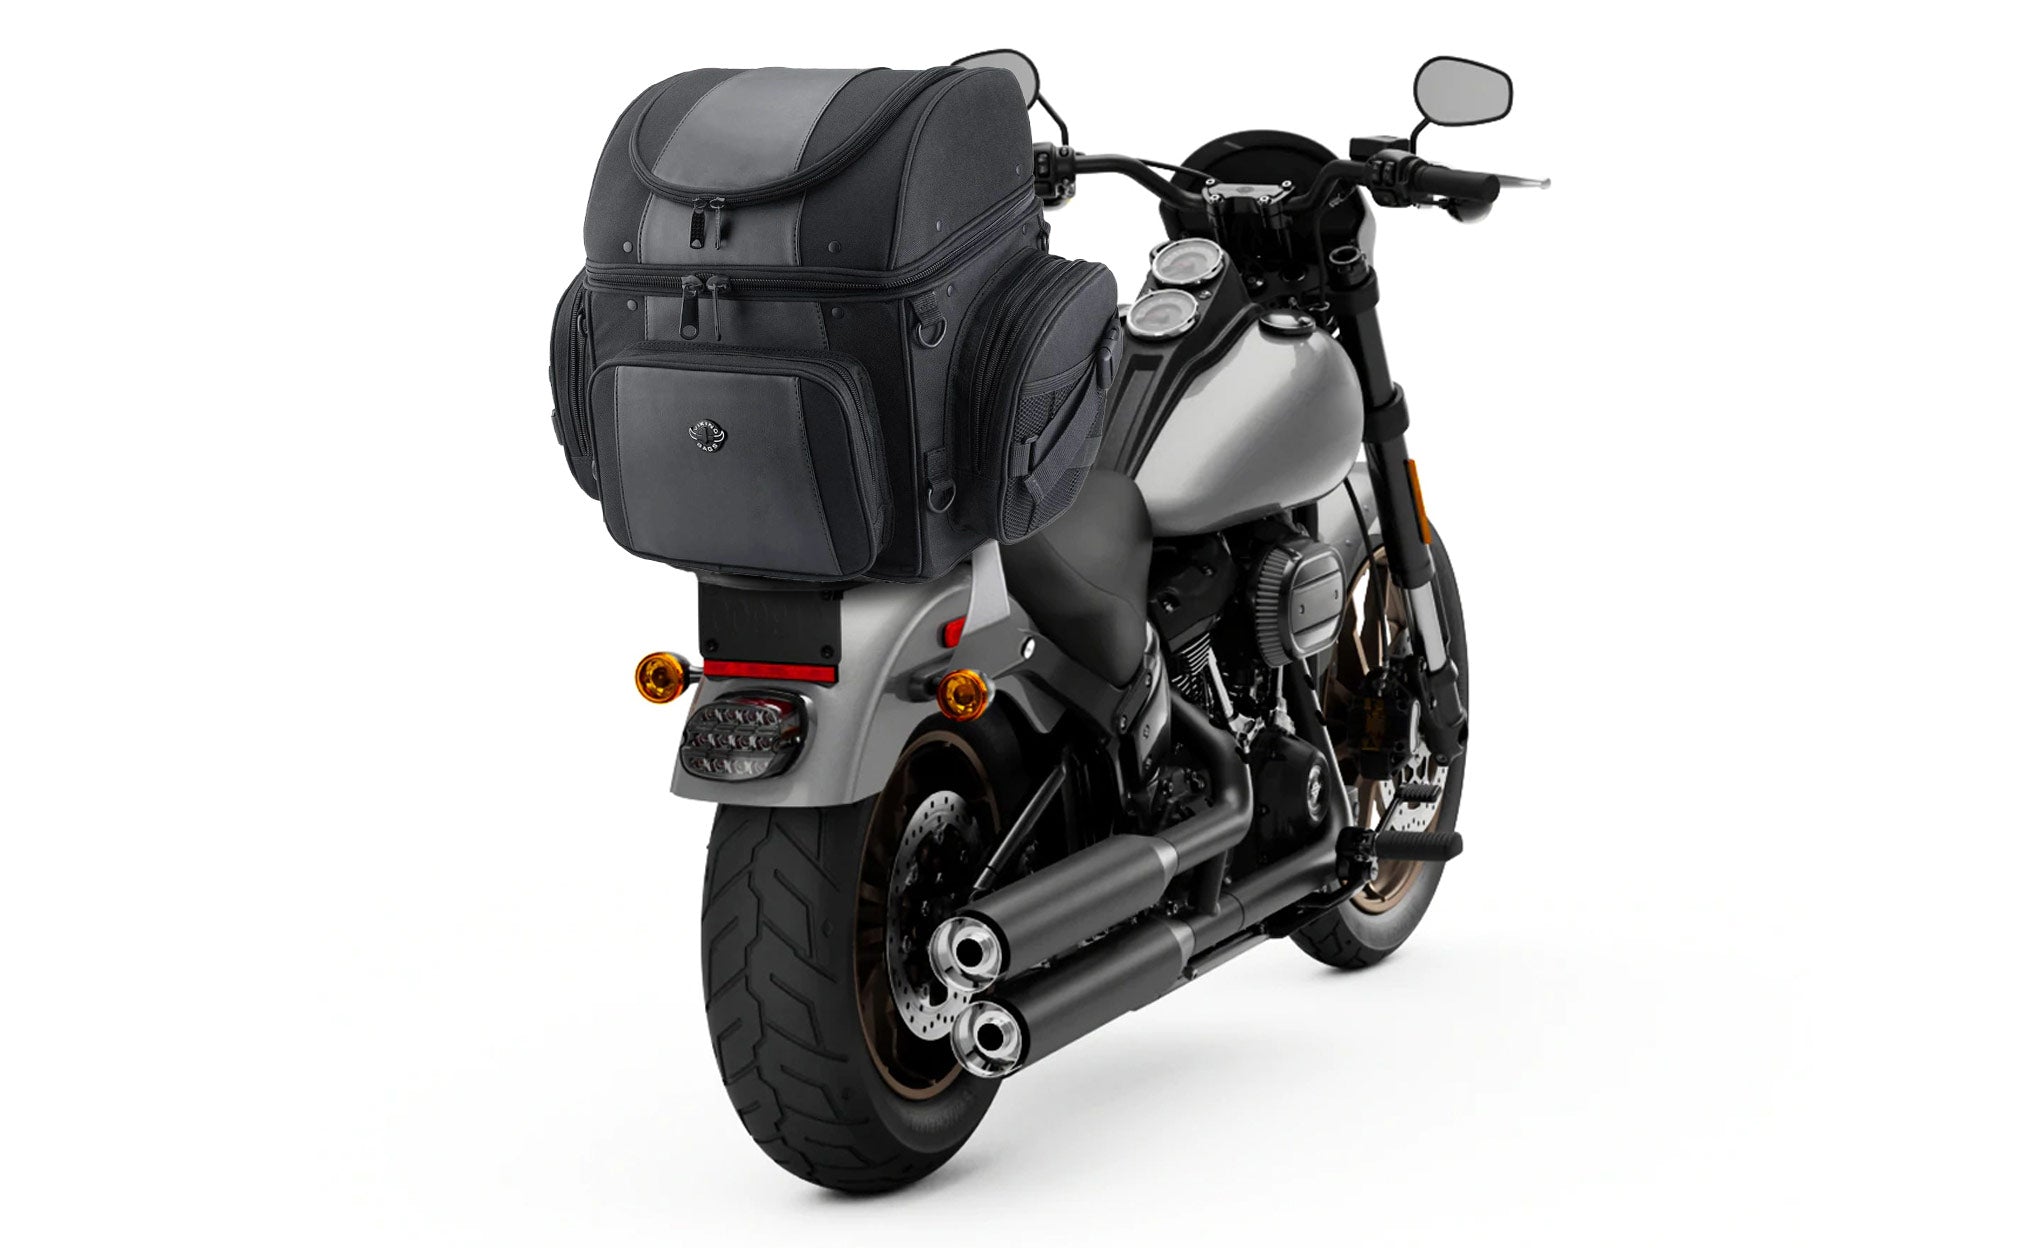 Viking Galleon Large Motorcycle Seat Luggage Bag on Bike View @expand